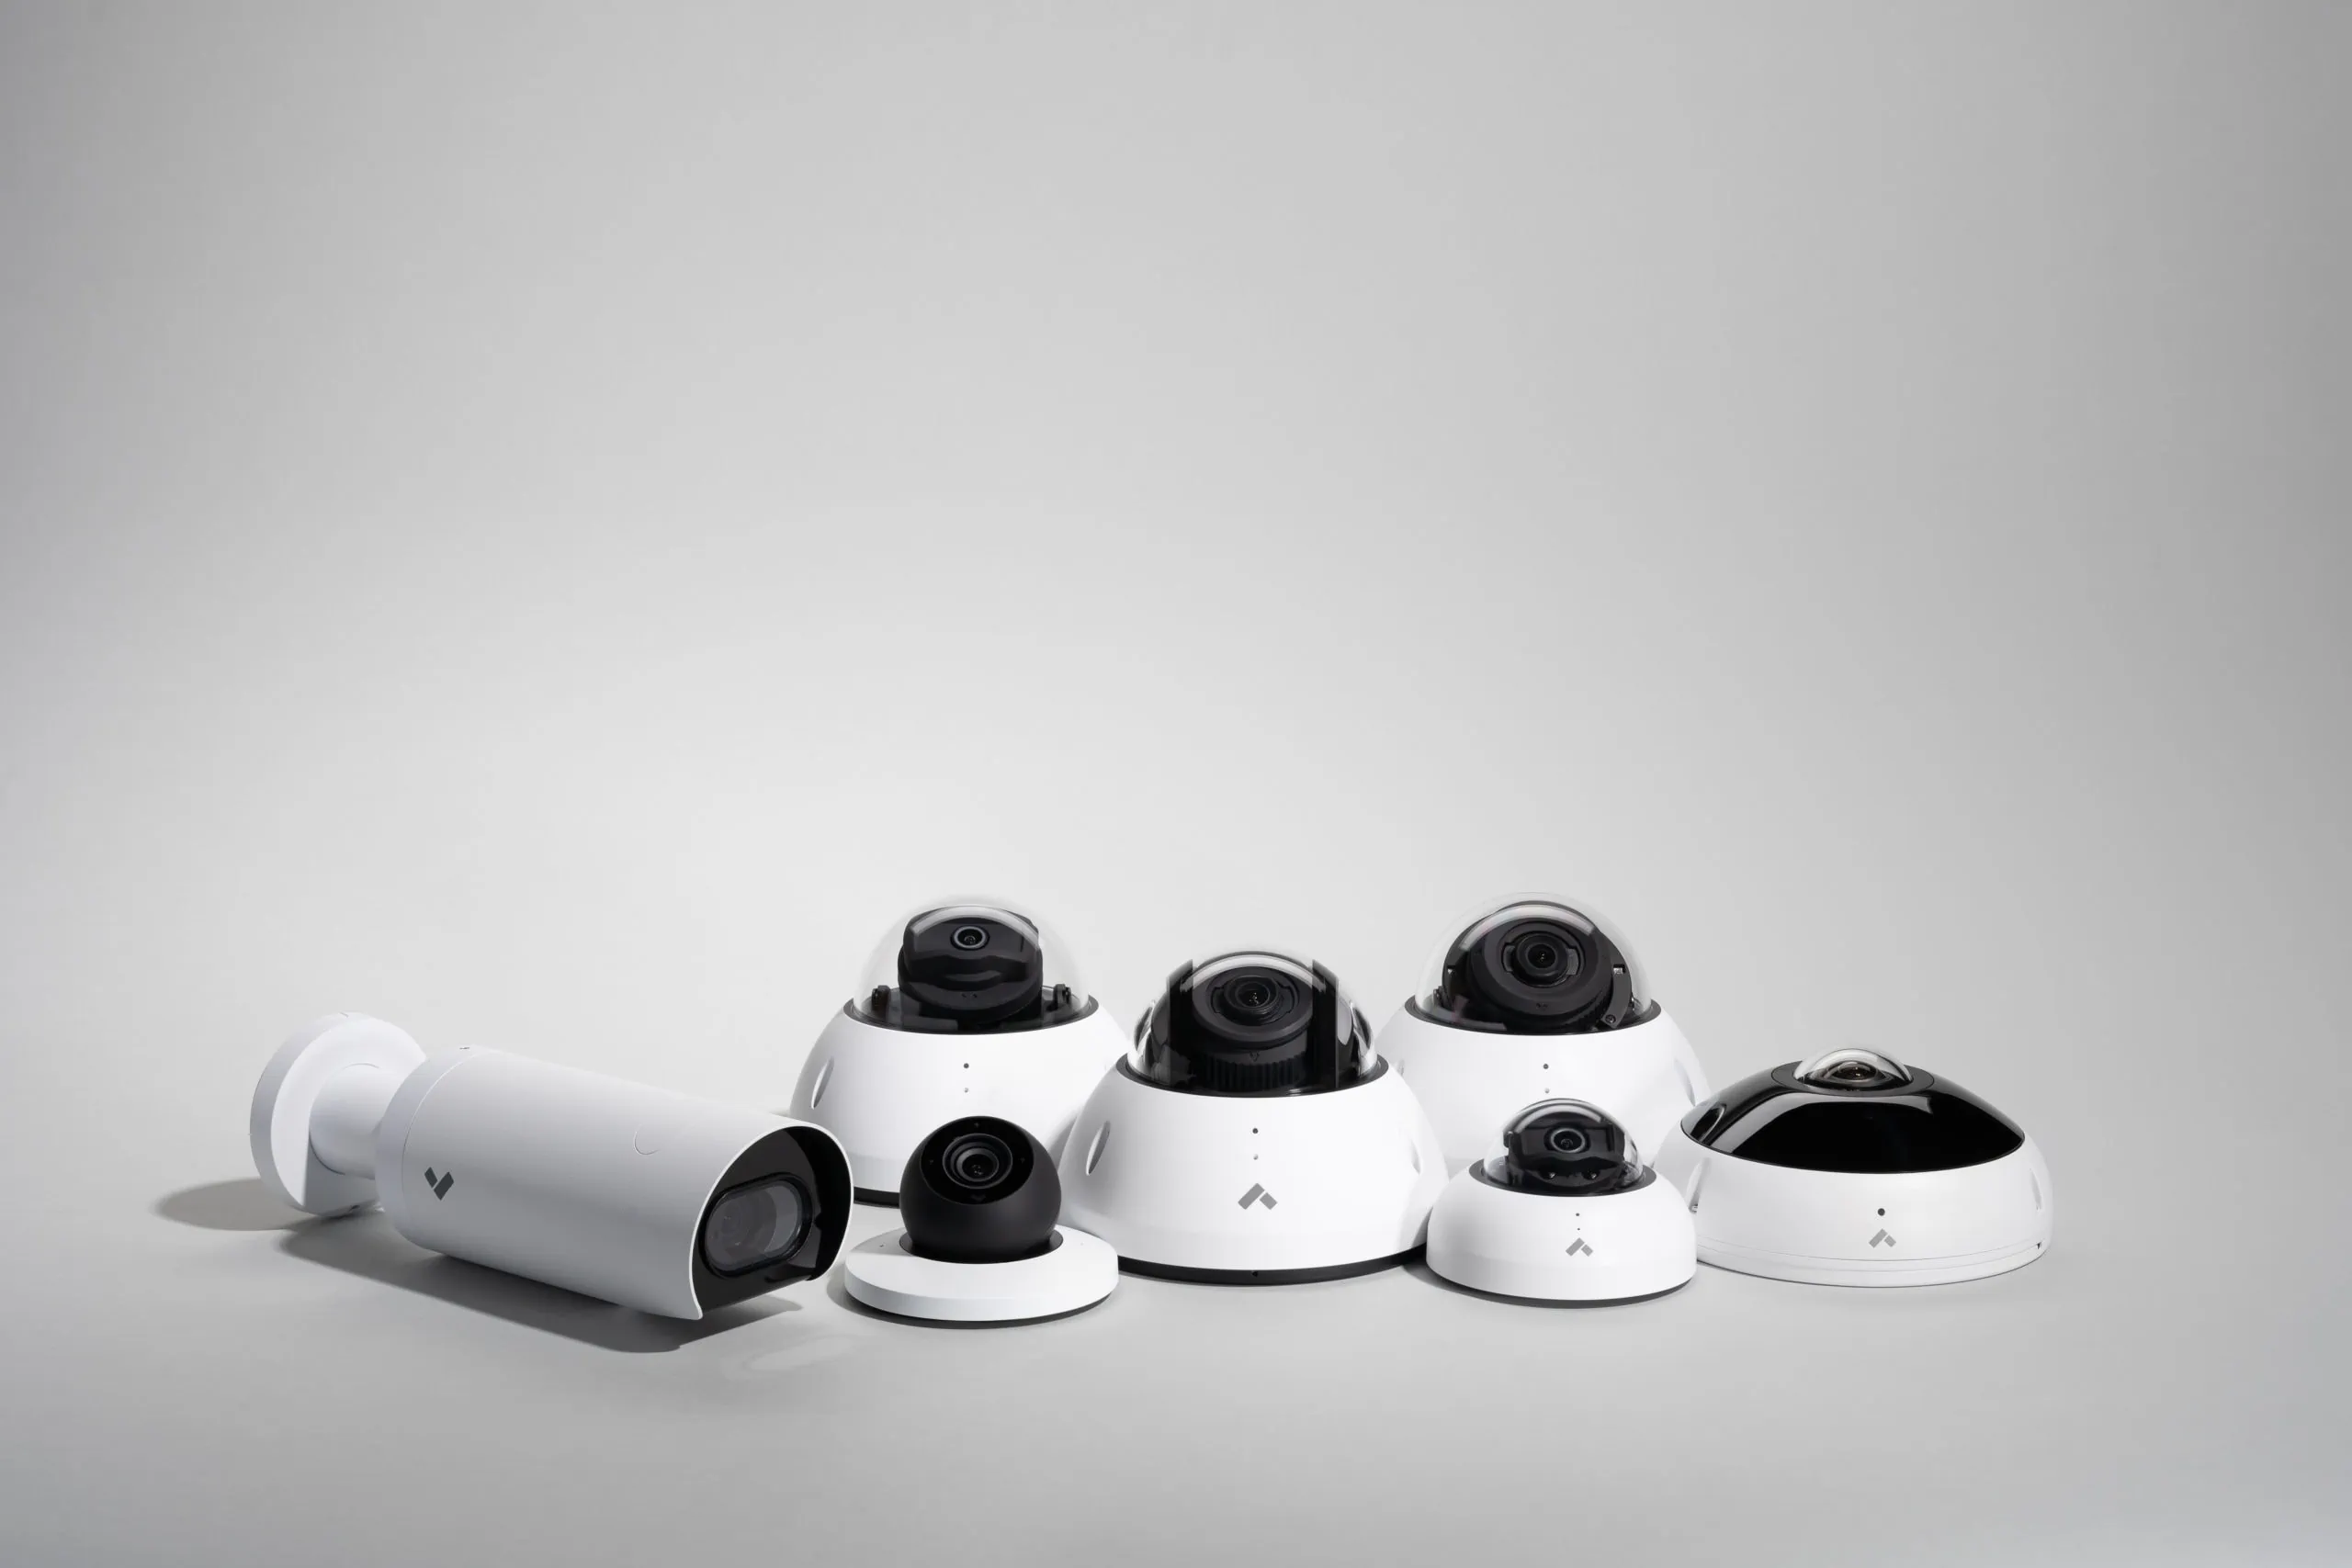 Verkada cameras with video analytics software